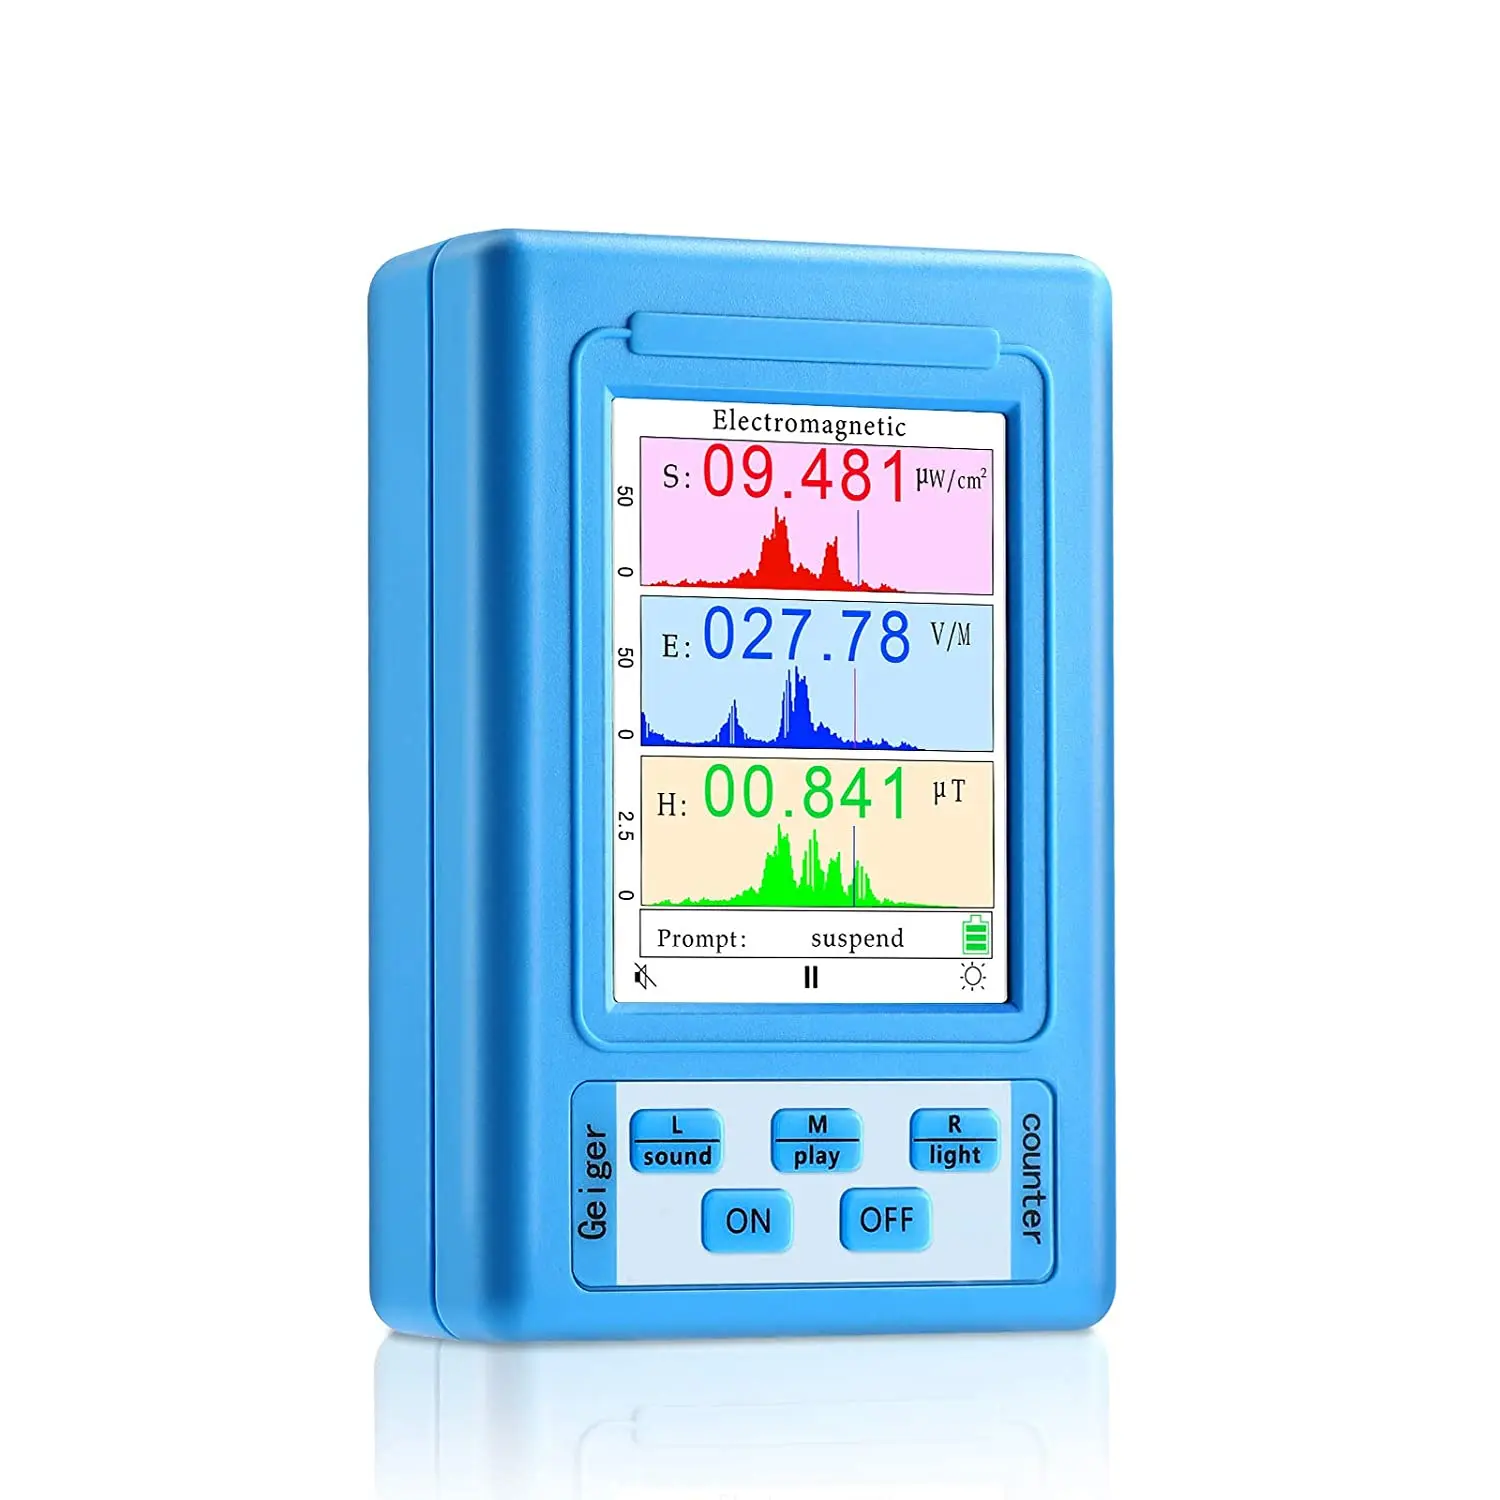 Electromagnetic Radiation Detectors Dosimeter Monitor Radiation EMF Meter Tester 